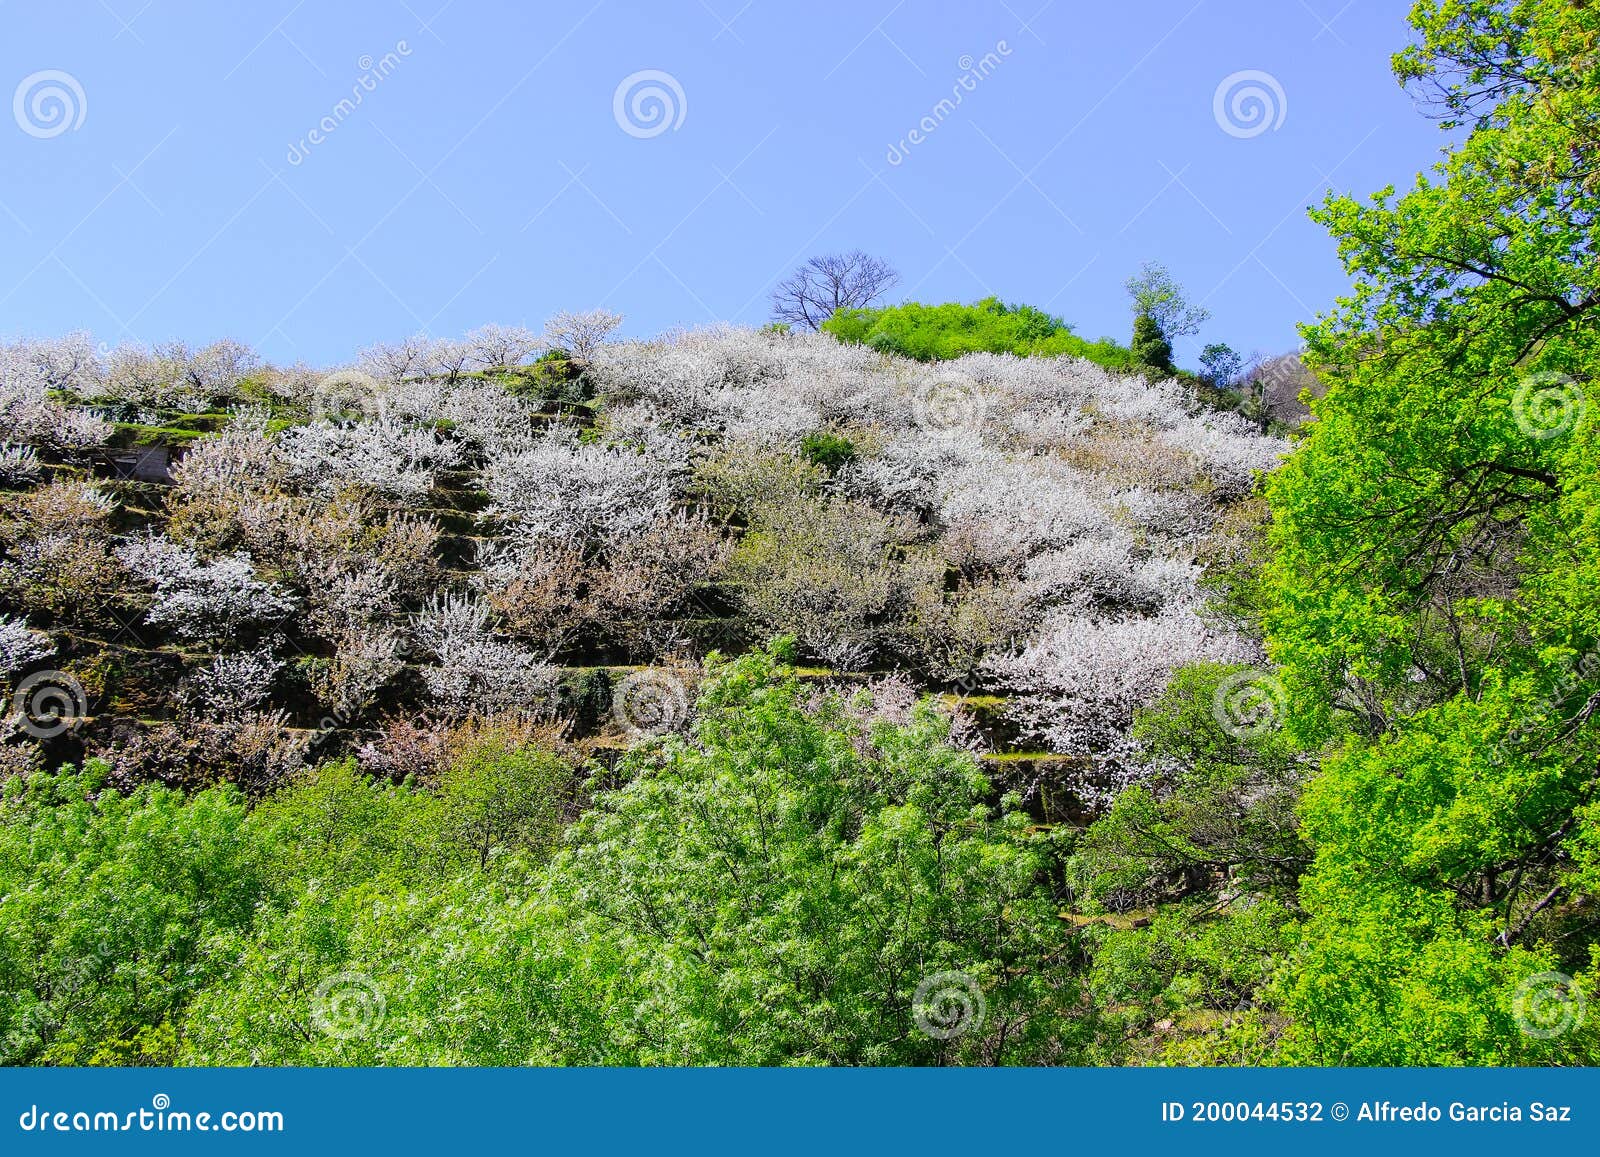 cherry blossom at jerte valley, cerezos en flor valle del jerte. cherry blossom flowers are in bloom